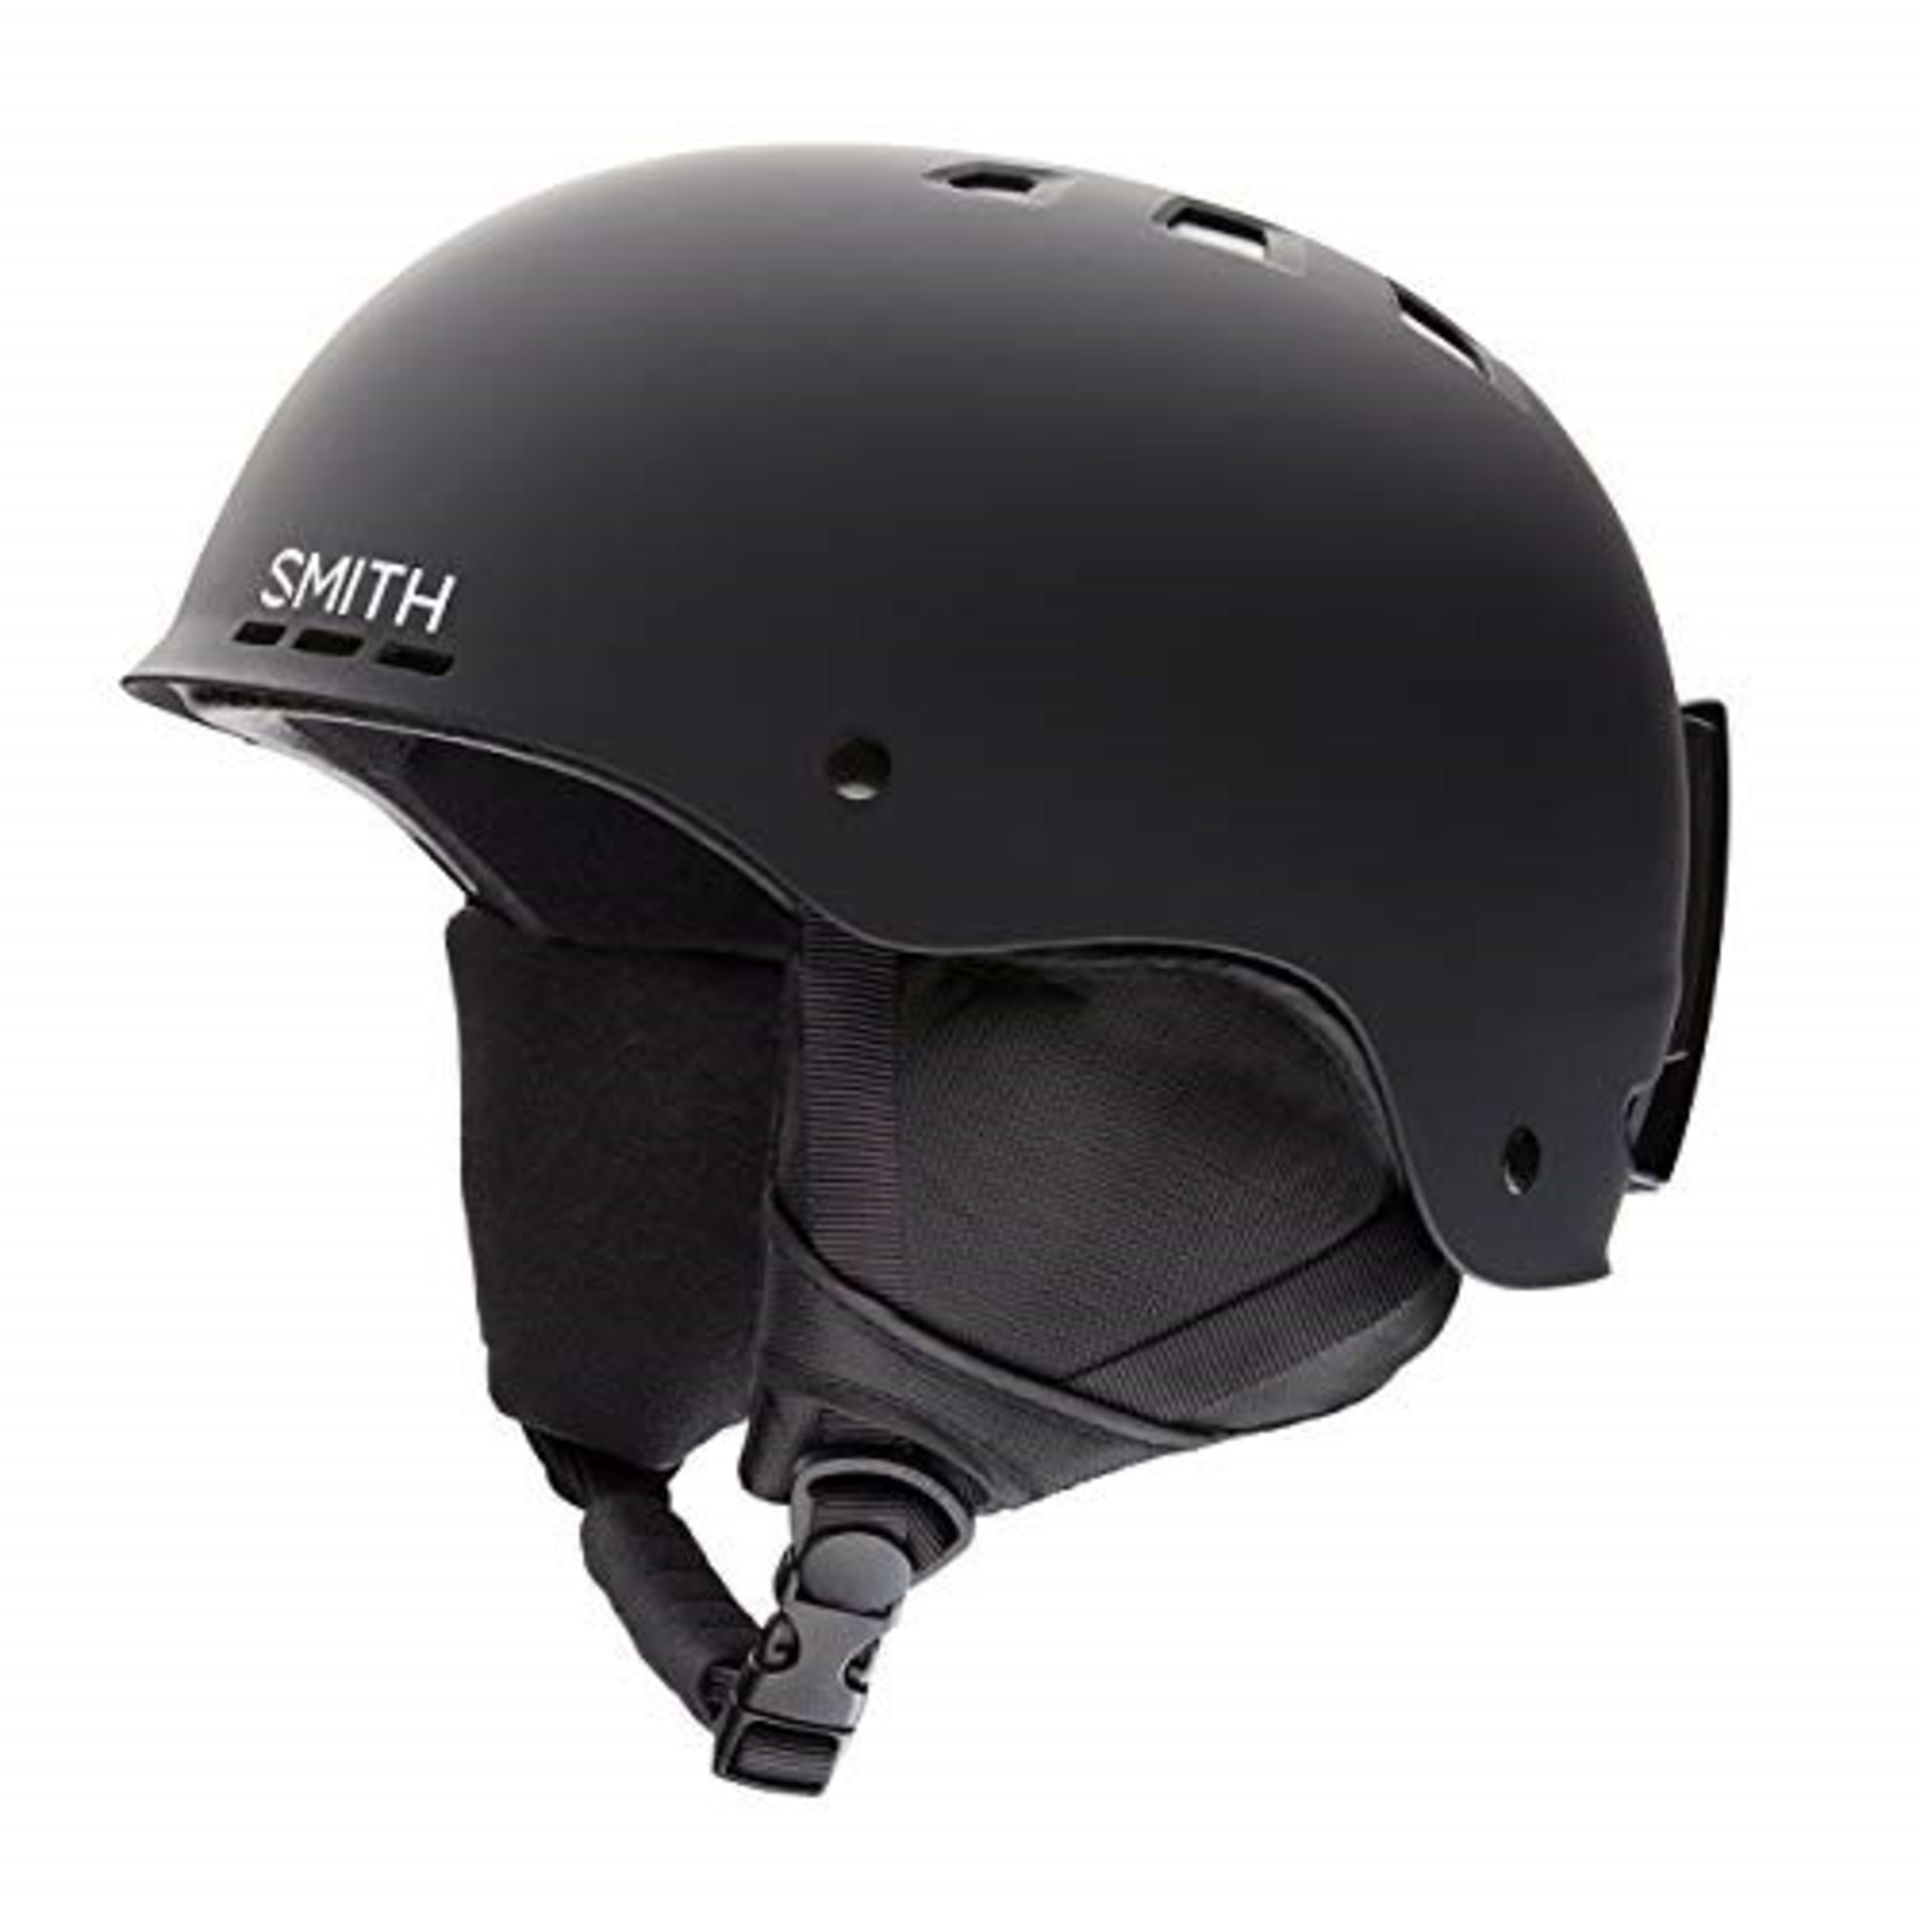 Smith Holt 2 Men's Outdoor Ski Helmet available in Matte Black - Size 51 - 55